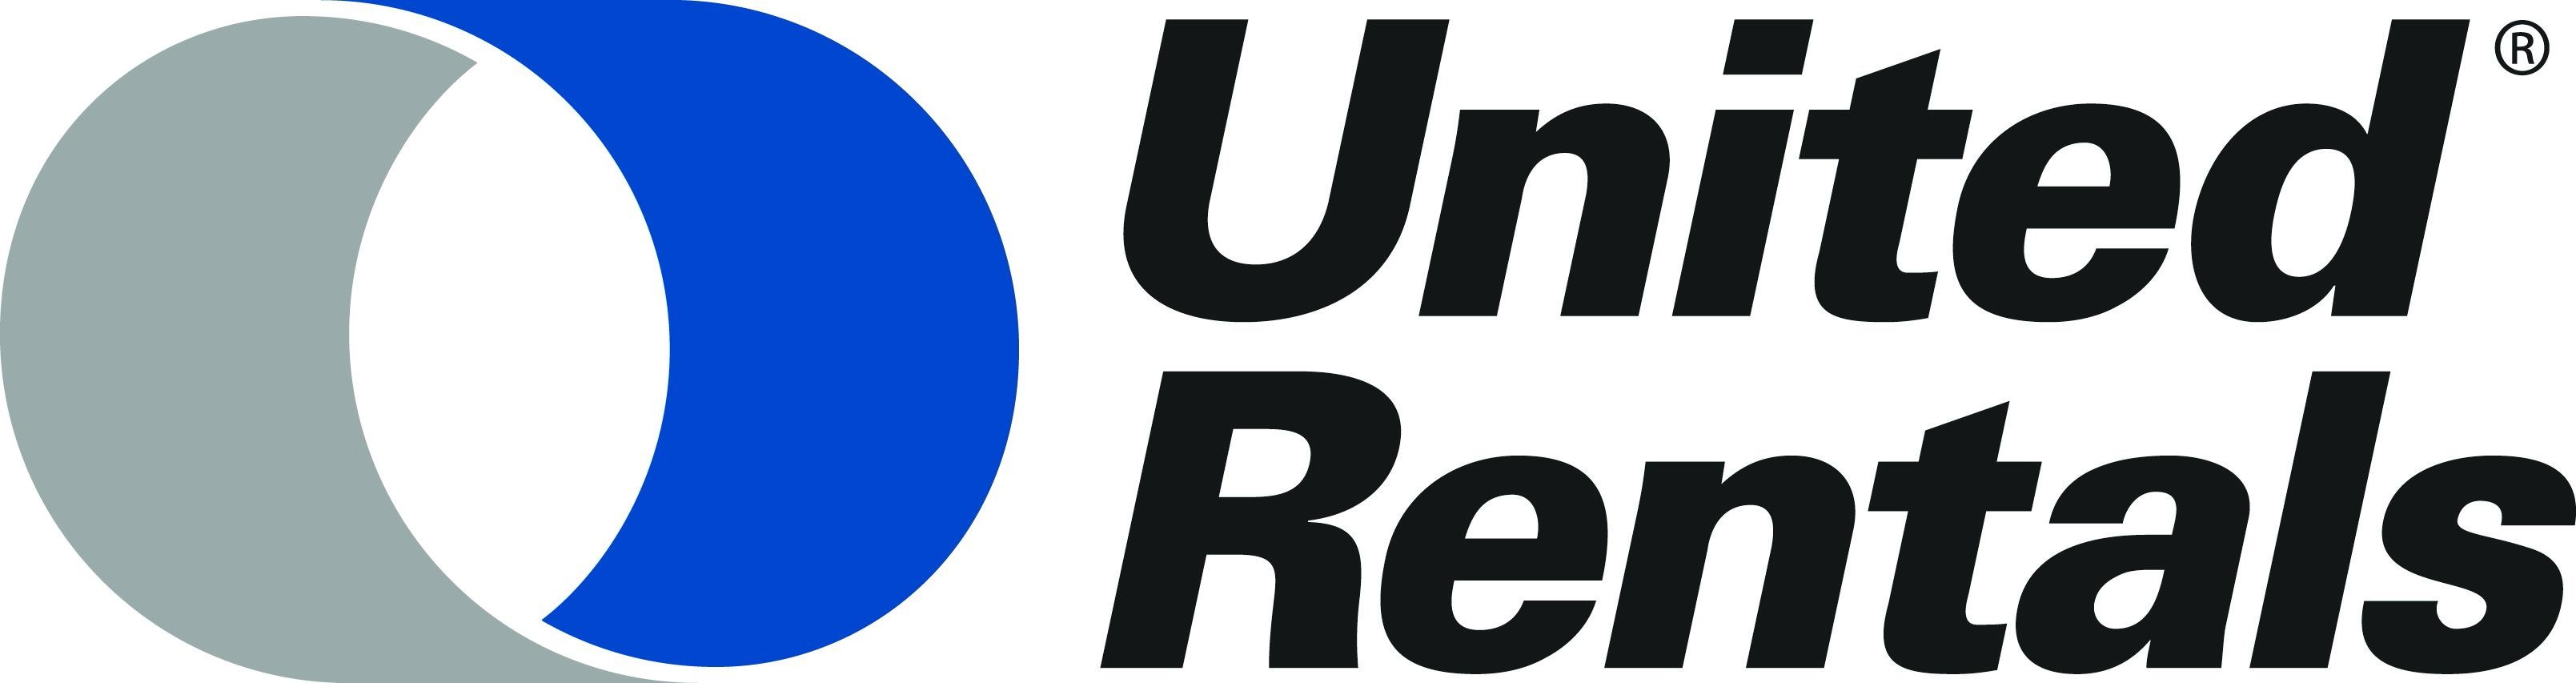 Used Equipment Co company logo